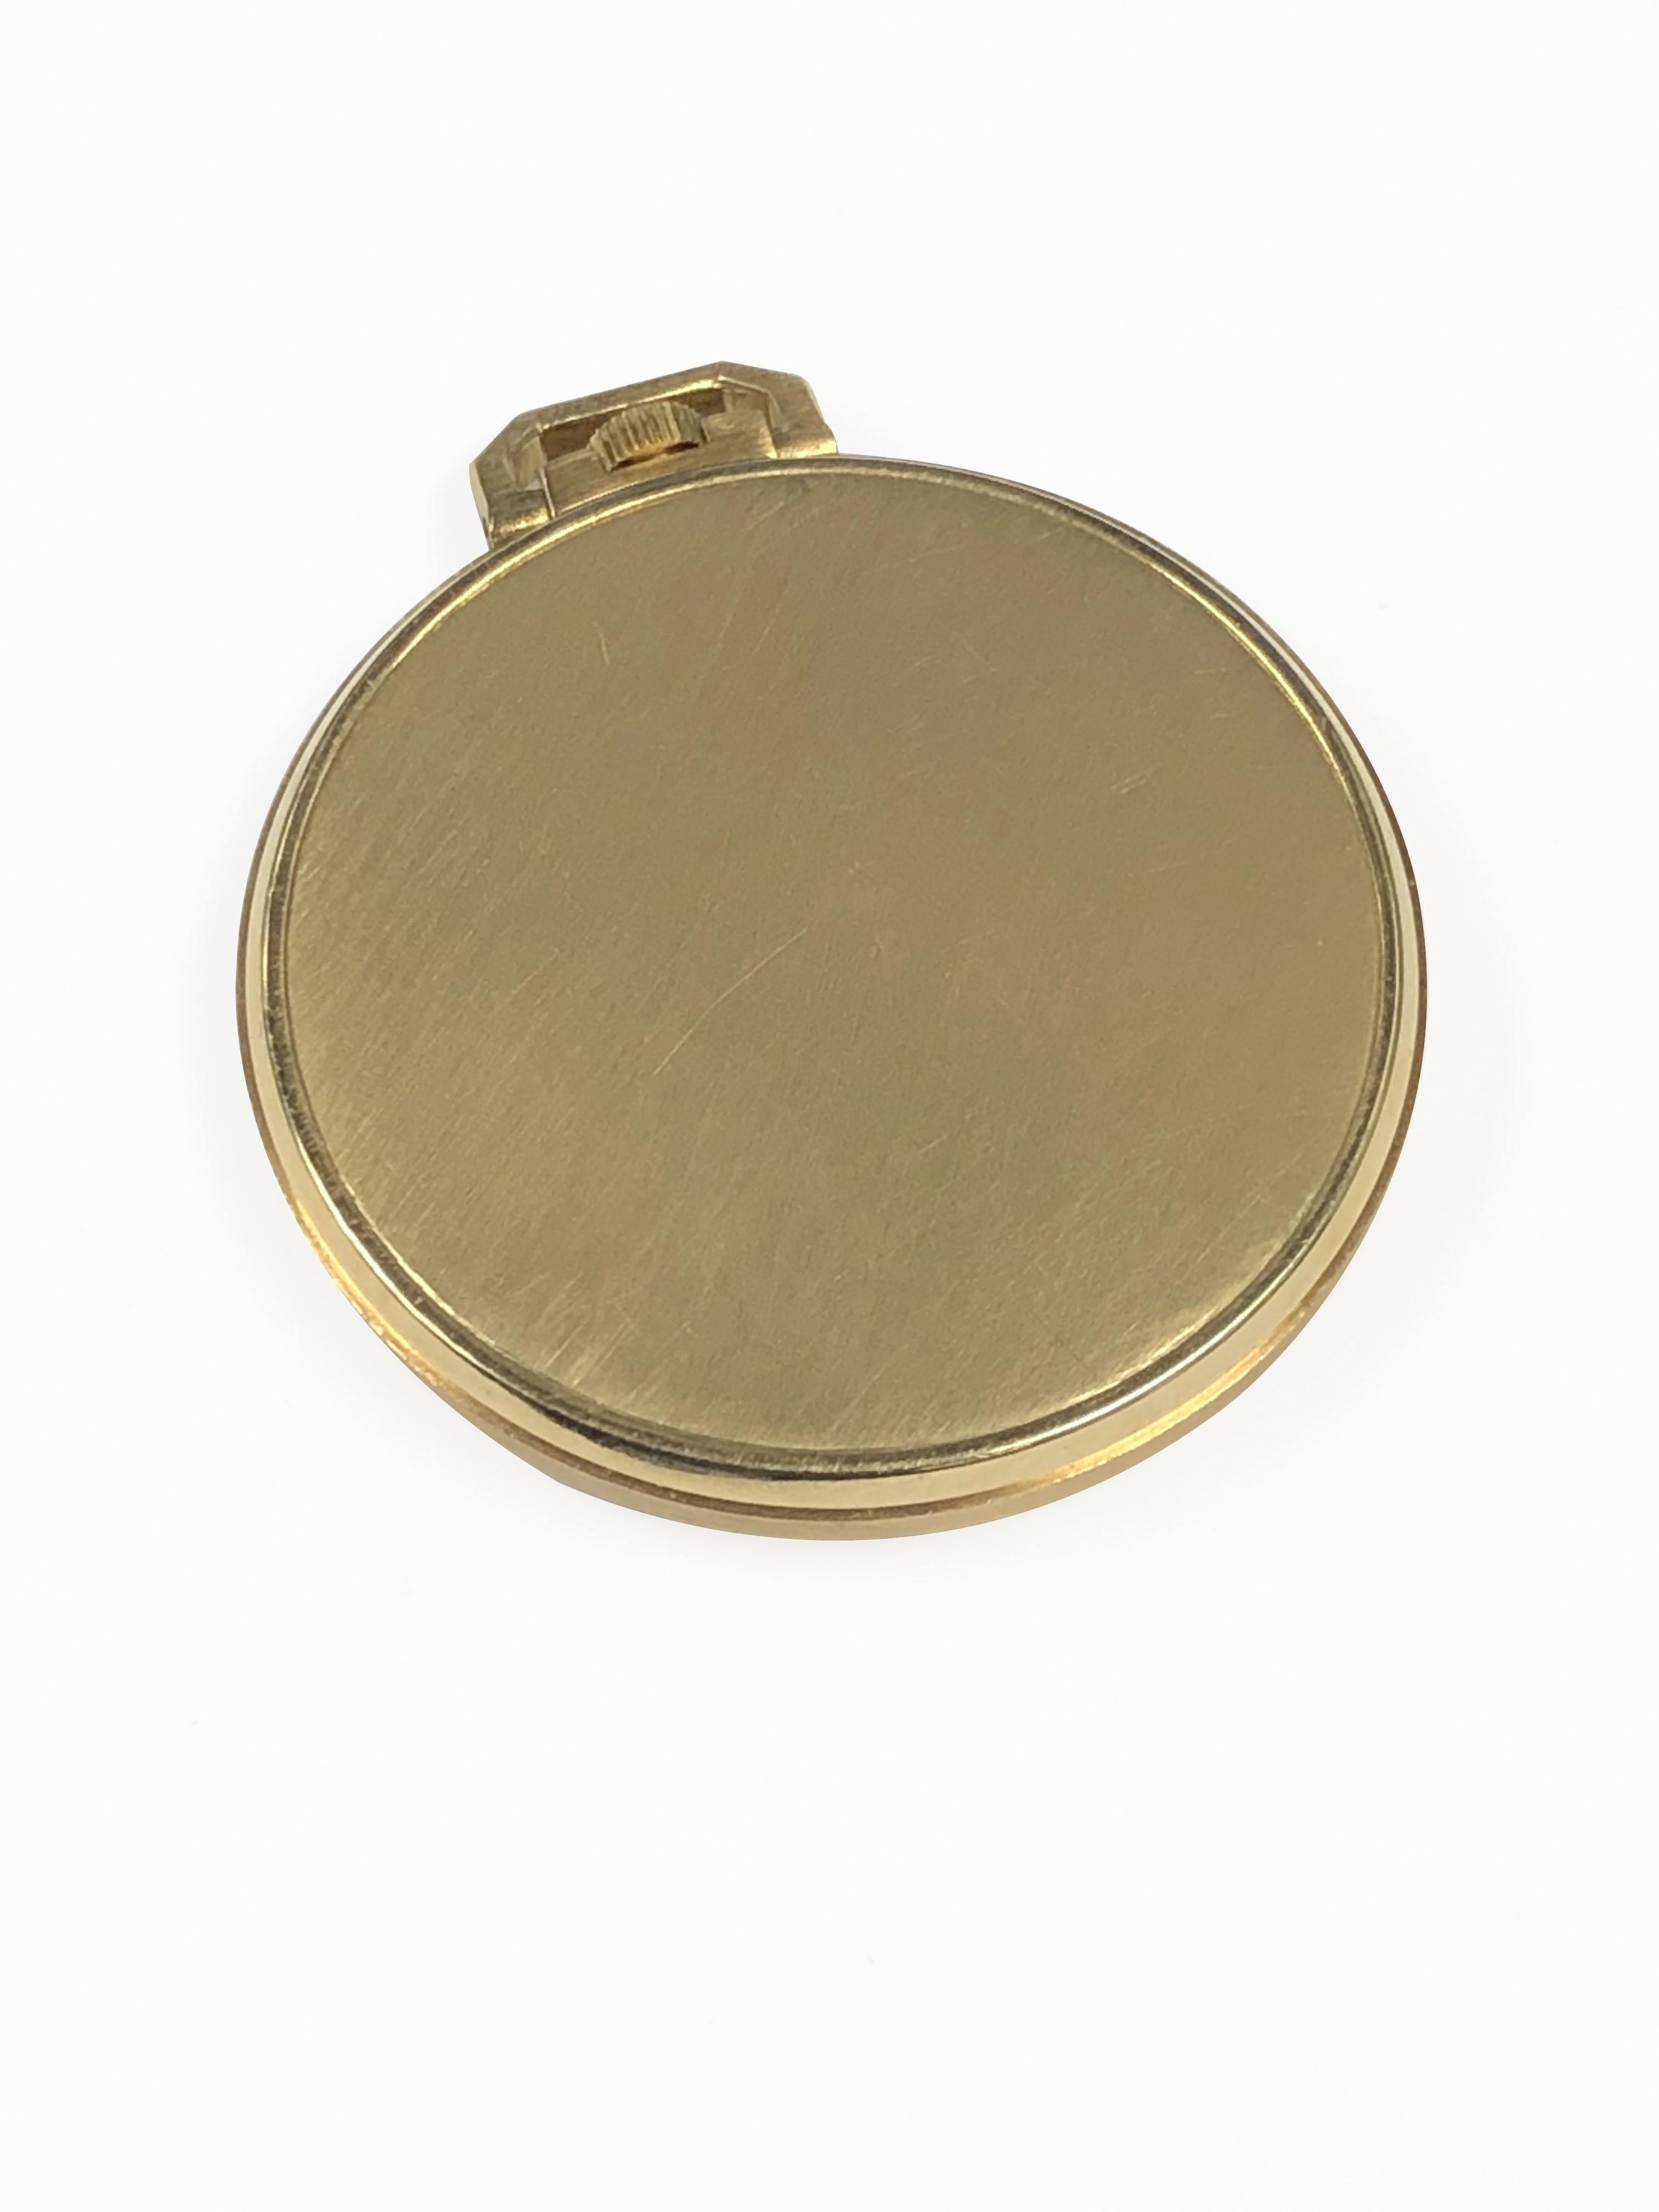 Women's or Men's Patek Philippe Ref 600 Yellow Gold Mechanical Pocket Watch